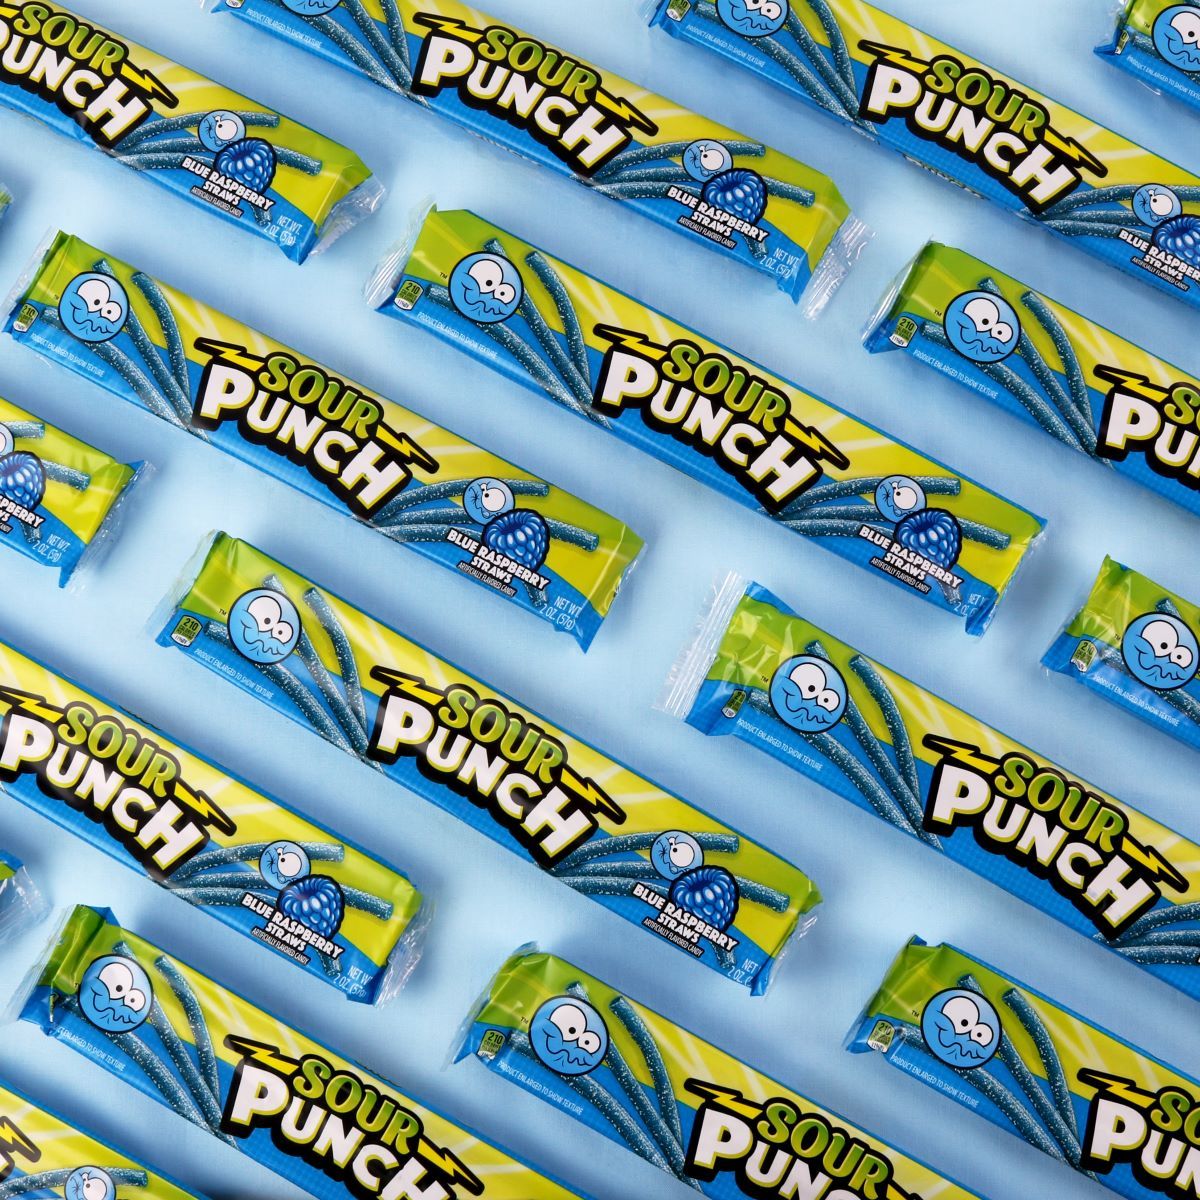 激安☆超特価 Sour Punch Straws Blue Raspberry 24 (pack Of 6) 洋菓子